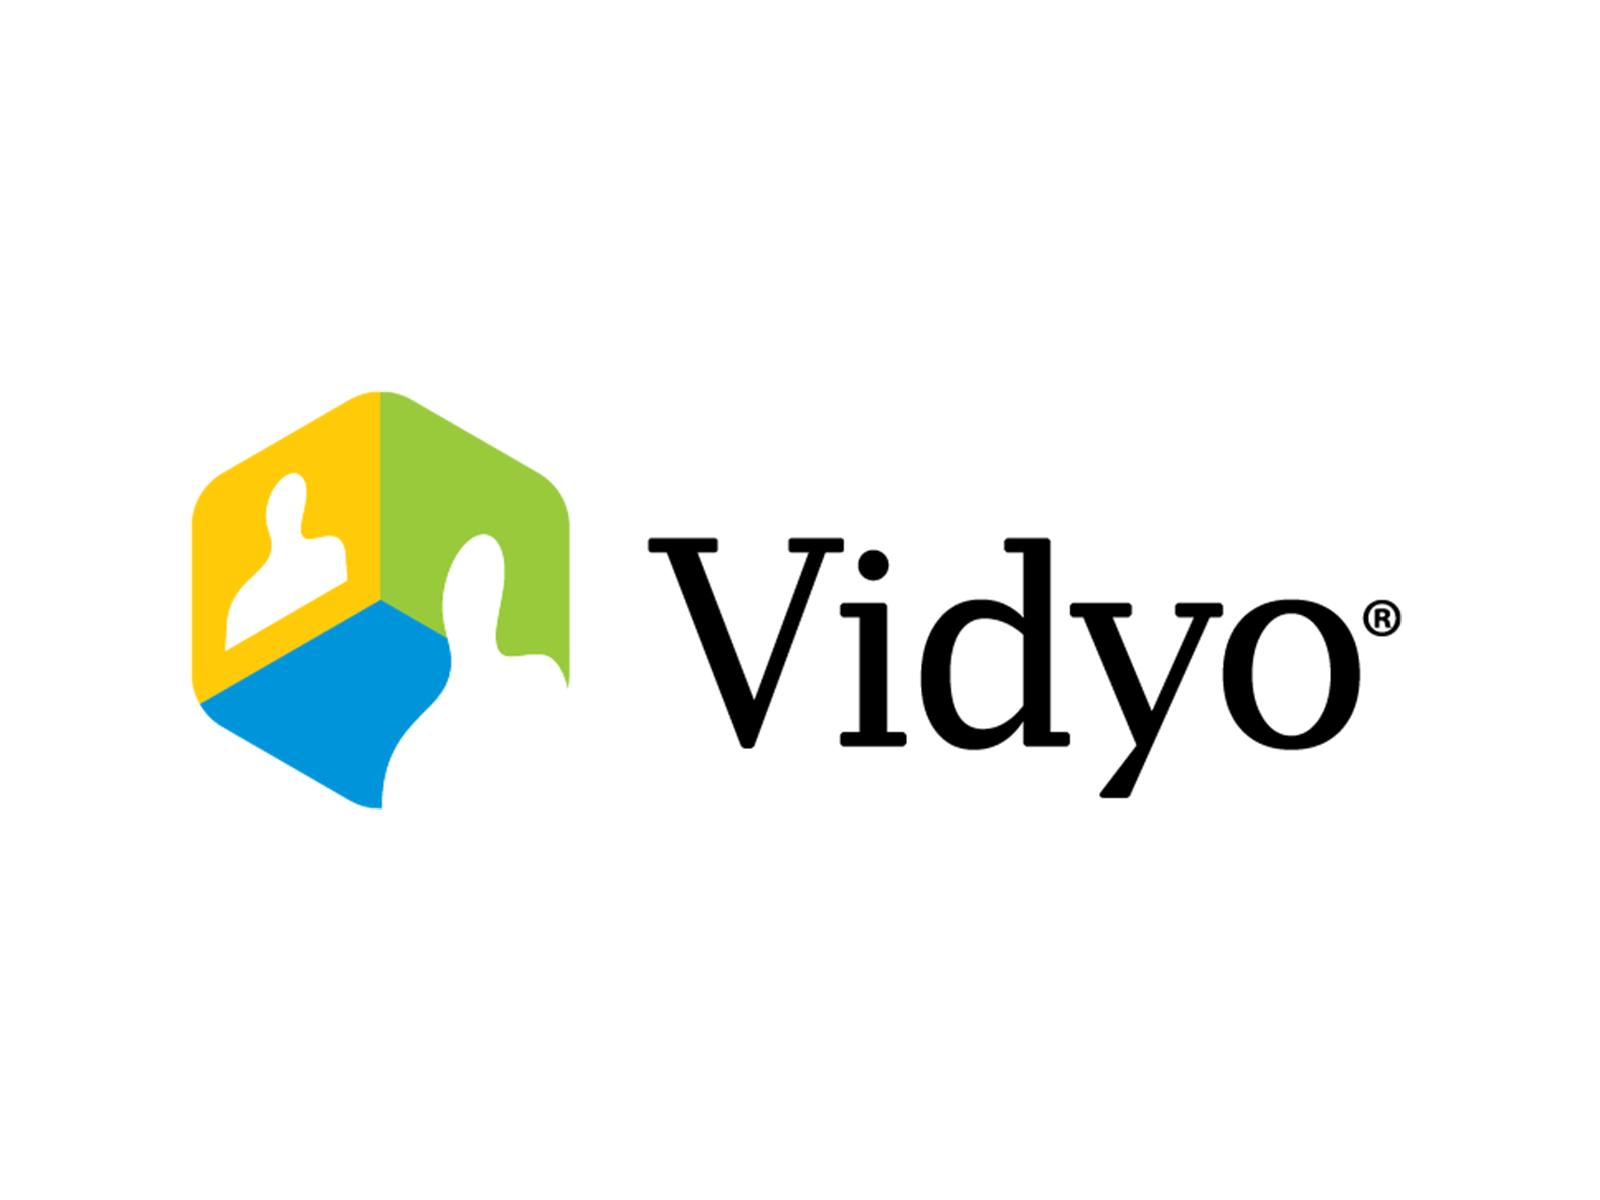 Communication & Collaboration as a Service by Vidyo